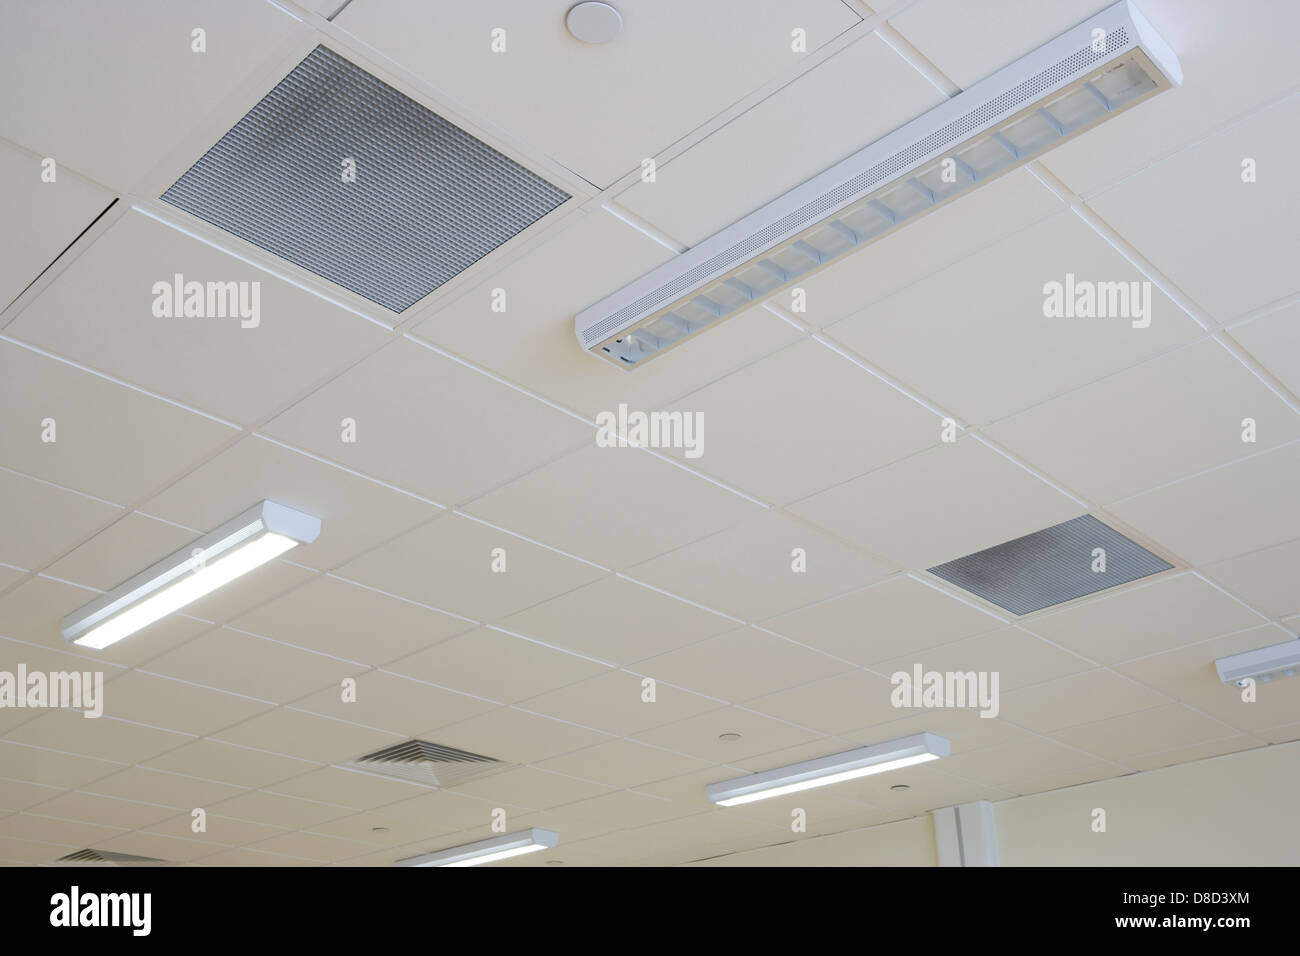 ceiling tiles Stock Photo